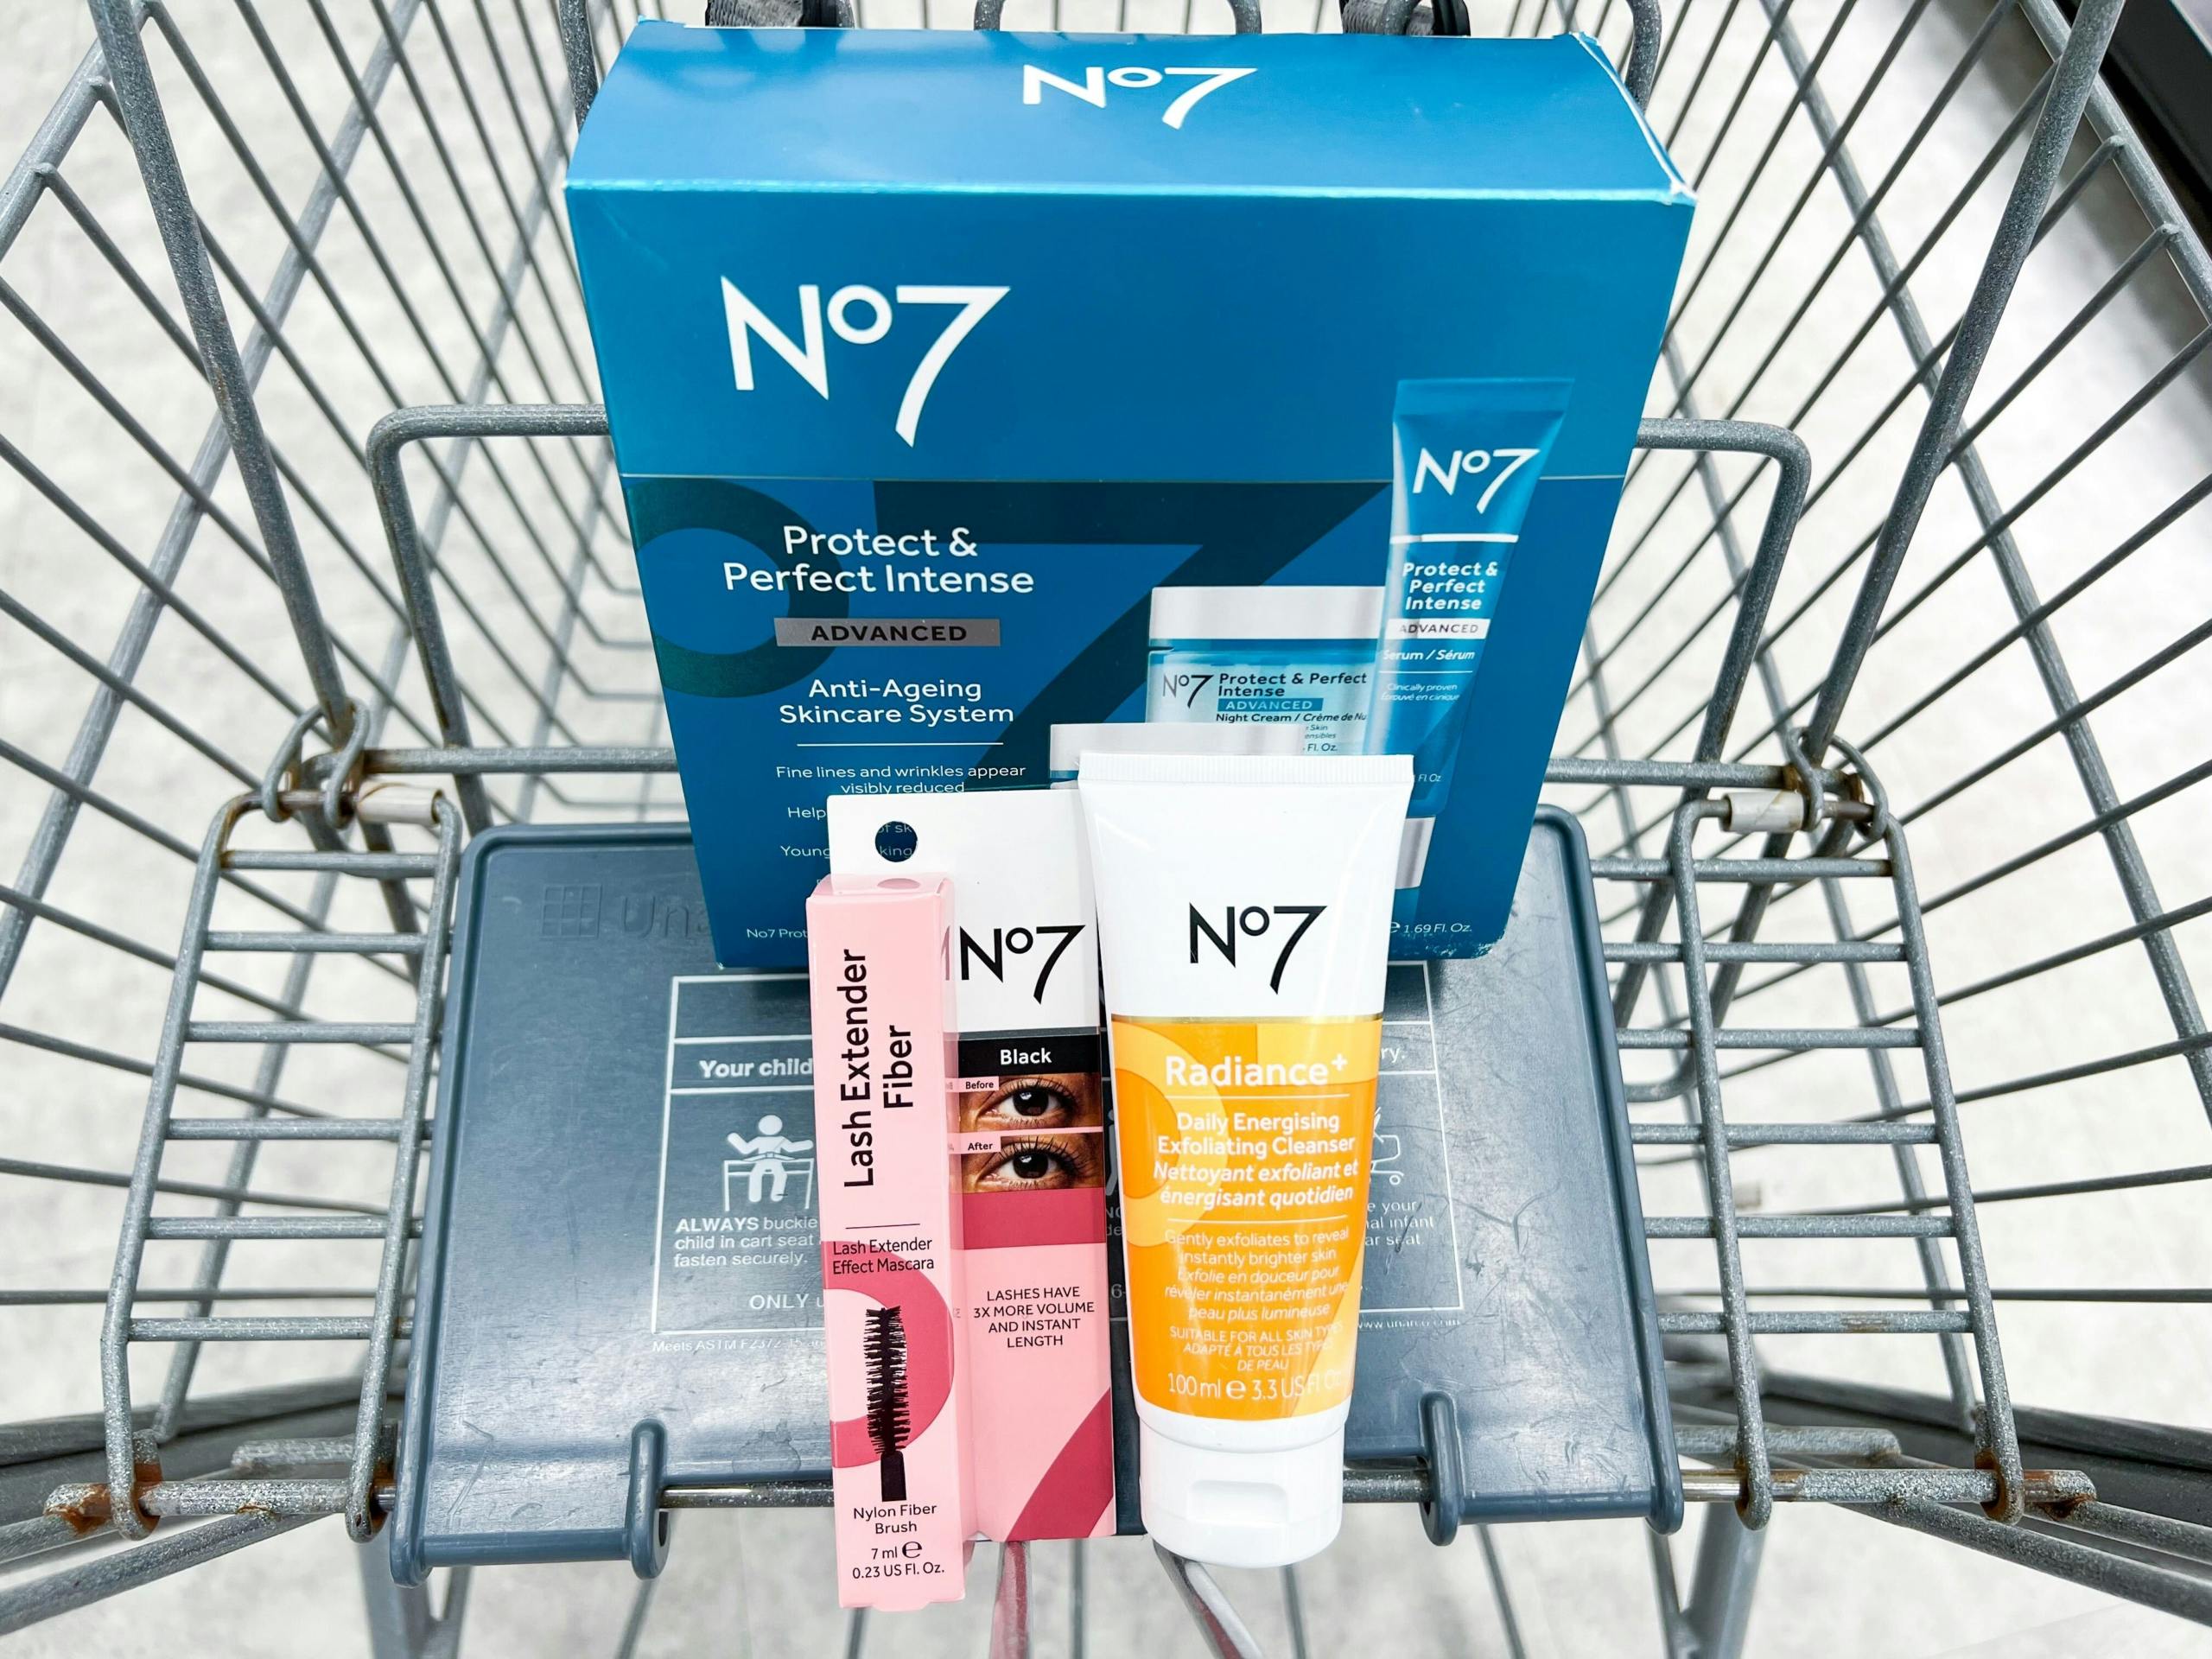 no7 gift set and mascara in shopping cart